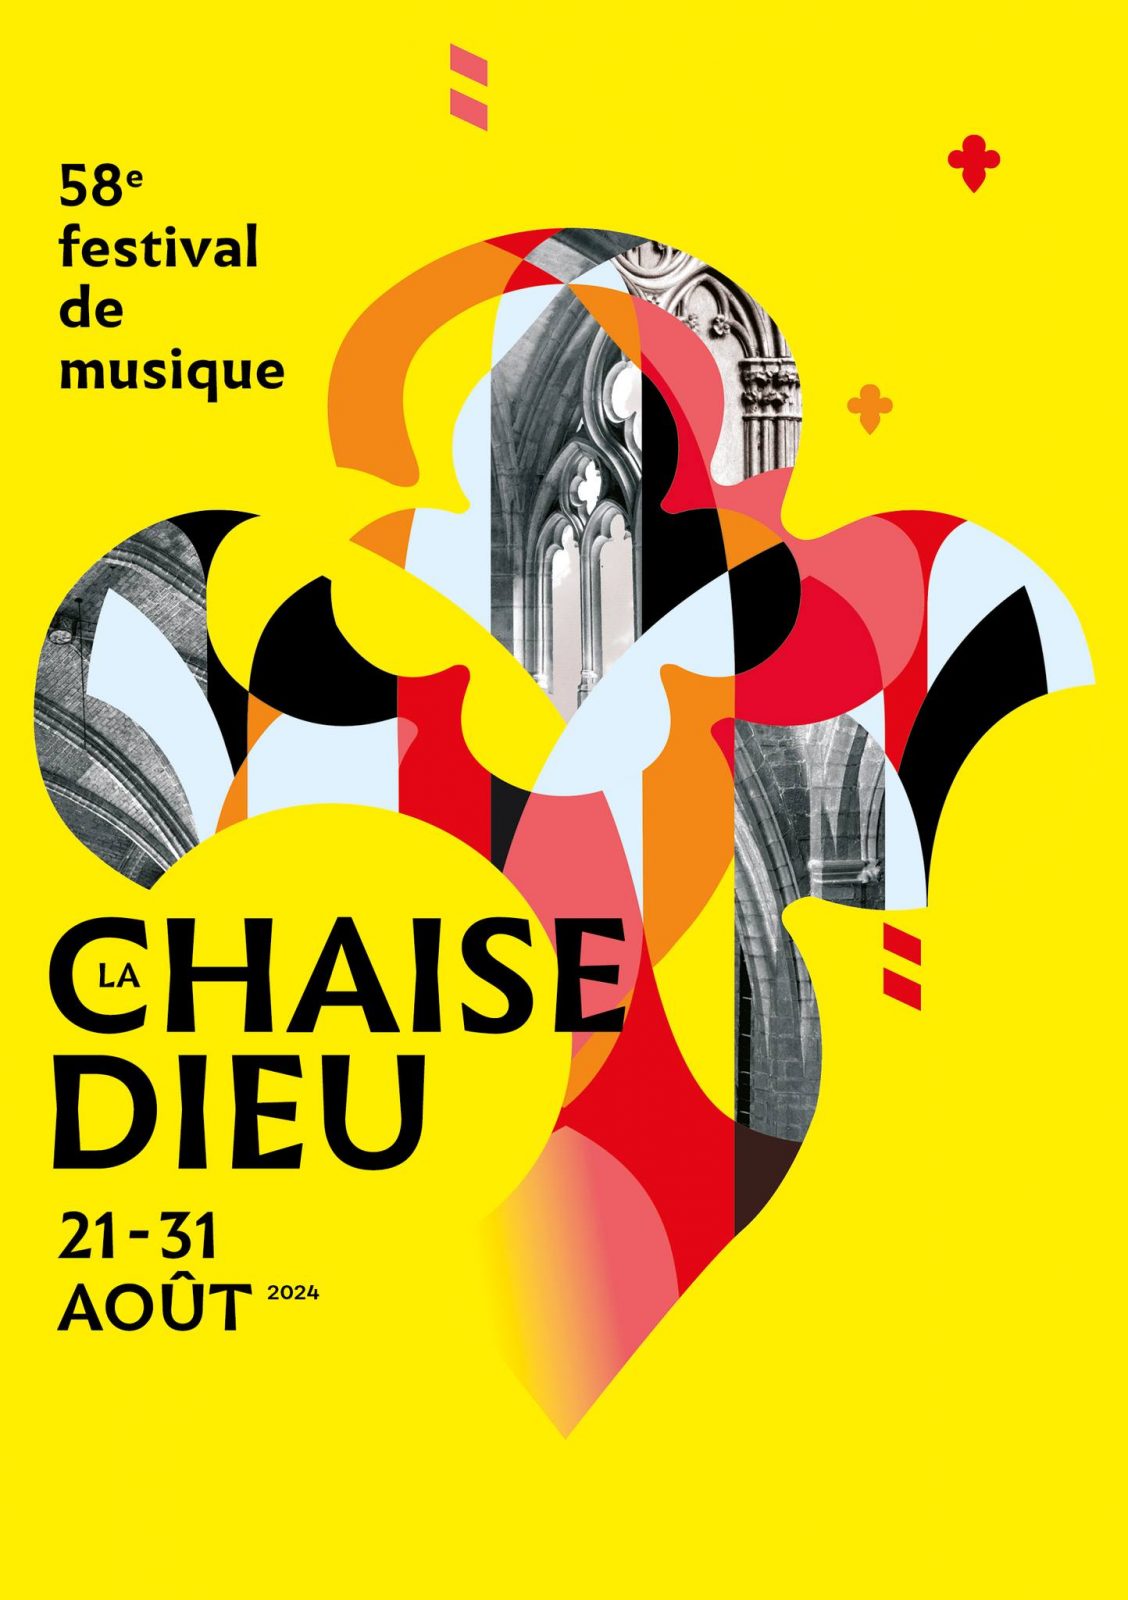 Classical music festival of La Chaise-Dieu